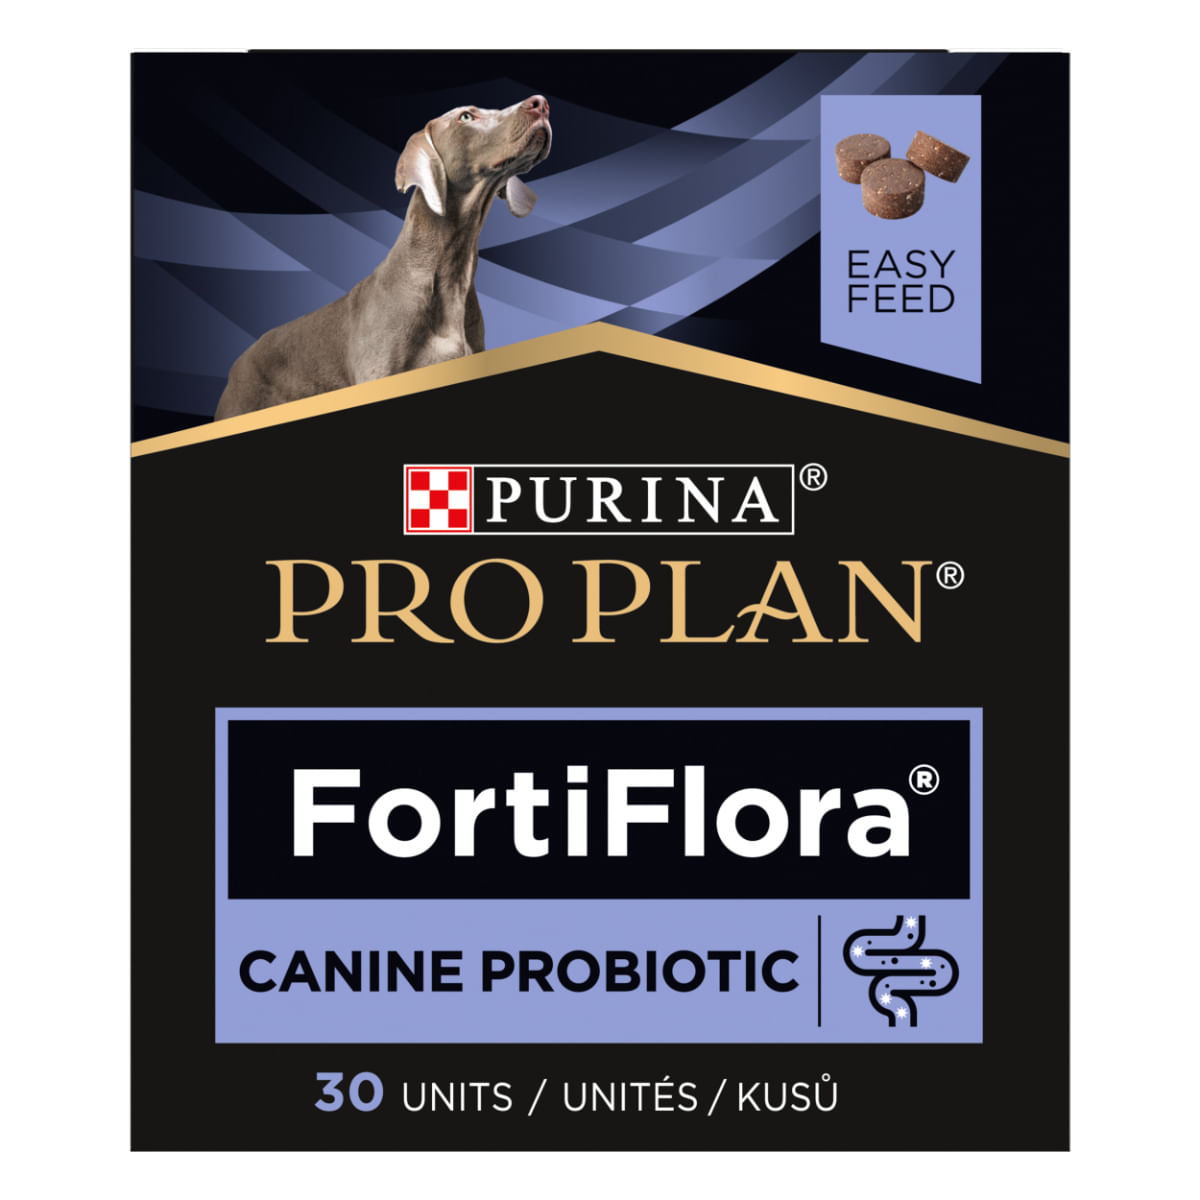 Purina Pro Plan Fortiflora Canine Probiotic Chews 30X1G